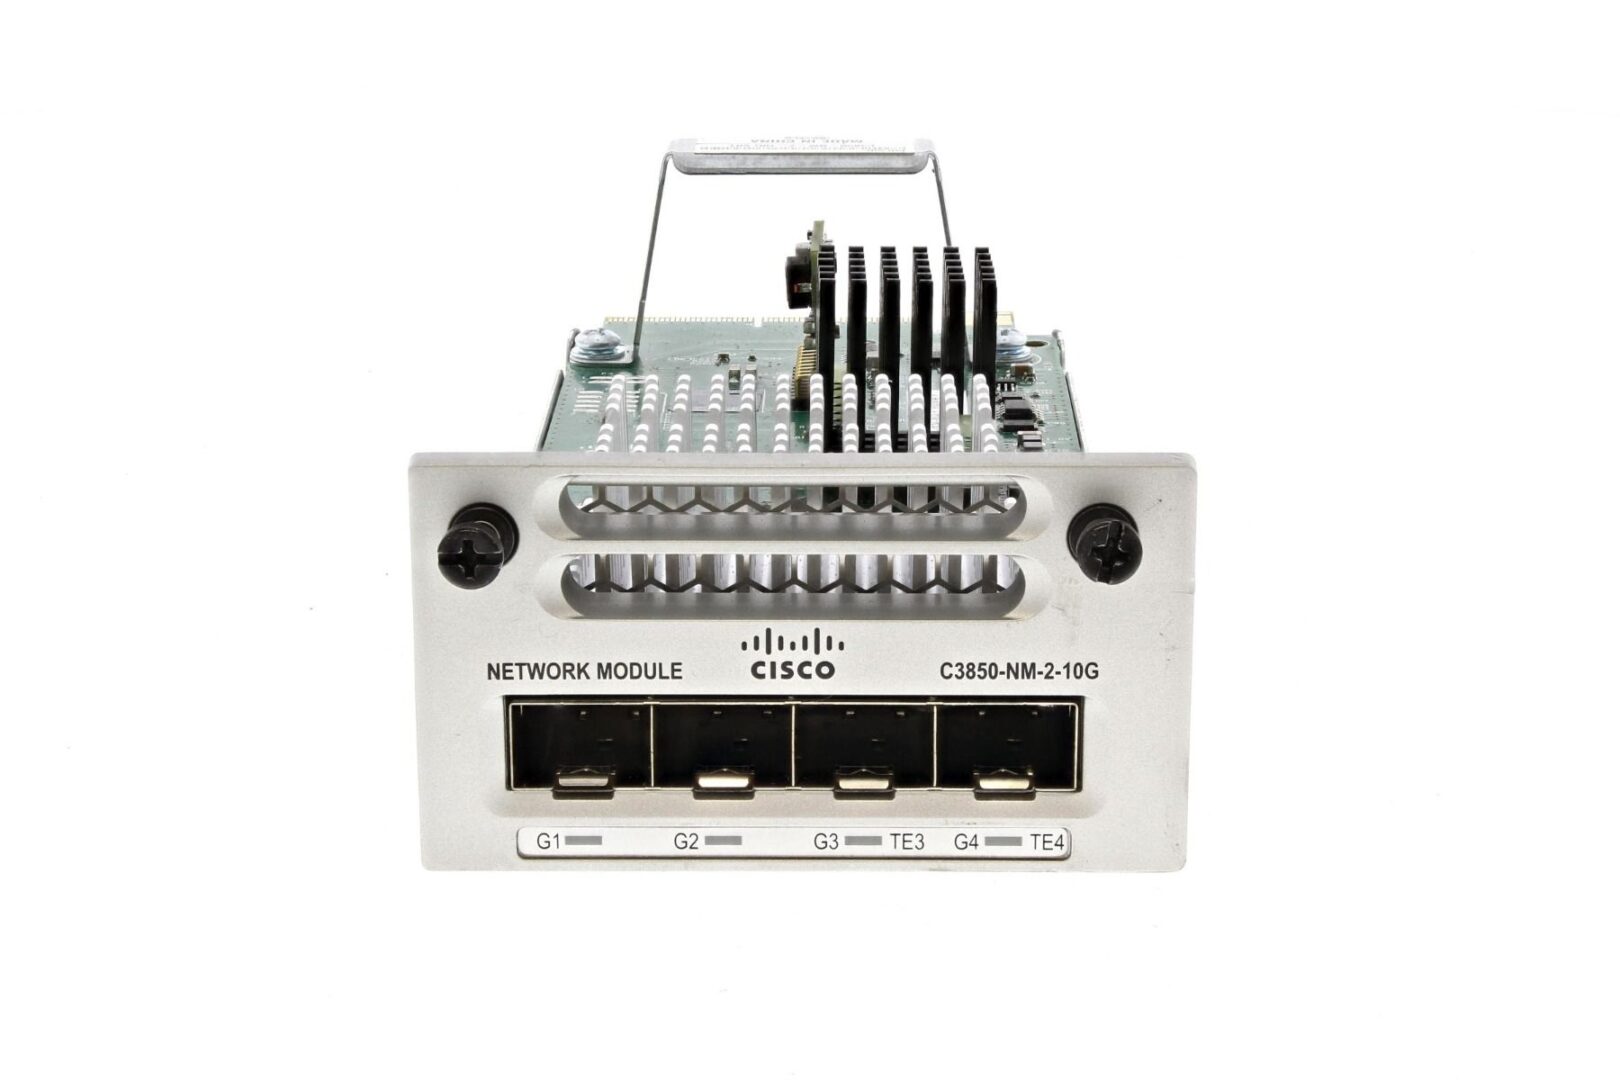 A Cisco C3850-NM-2-10G Network Module